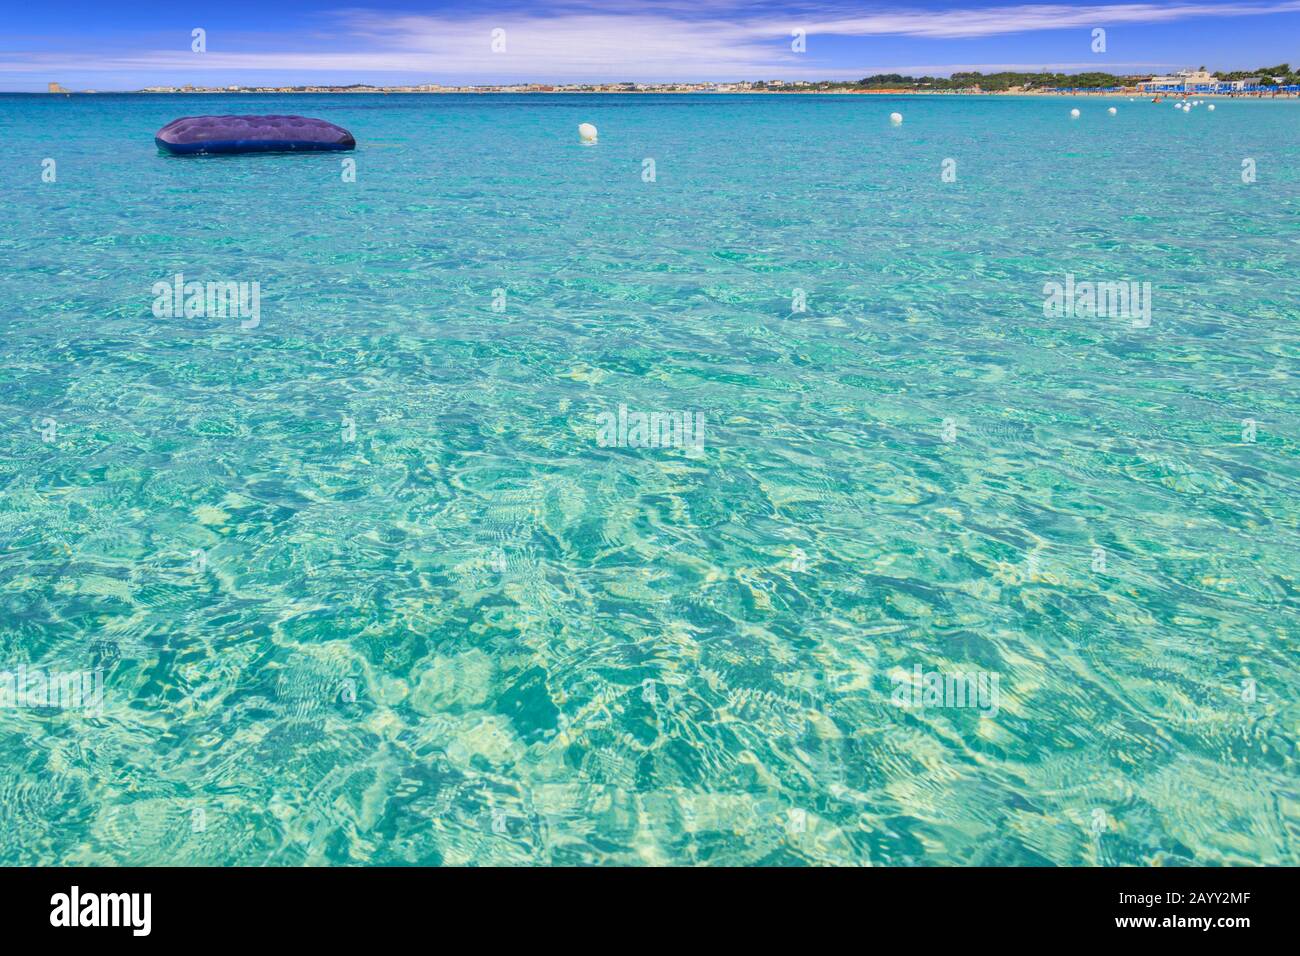 The most beautiful sandy beaches of Apulia: Porto Cesareo marine in Salento coast, Italy. Stock Photo